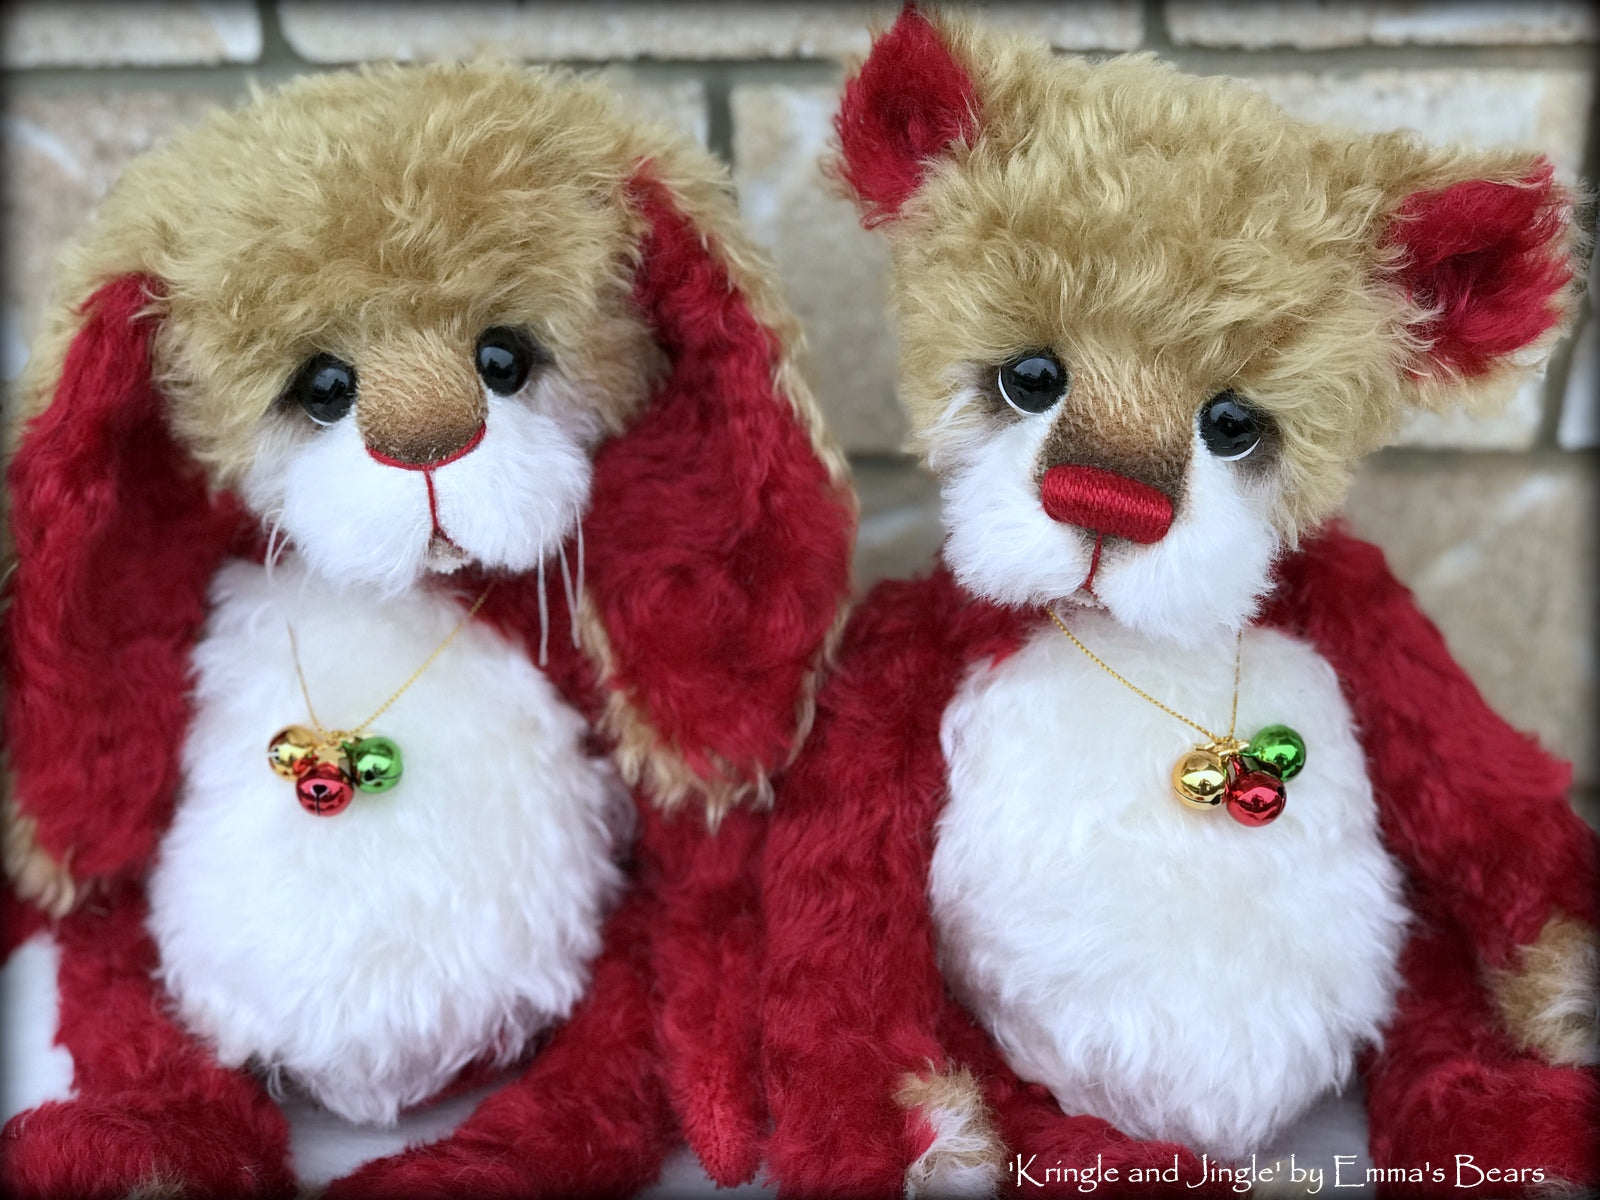 Kringle - 14" kid mohair Christmas artist bunny by Emmas Bears - OOAK